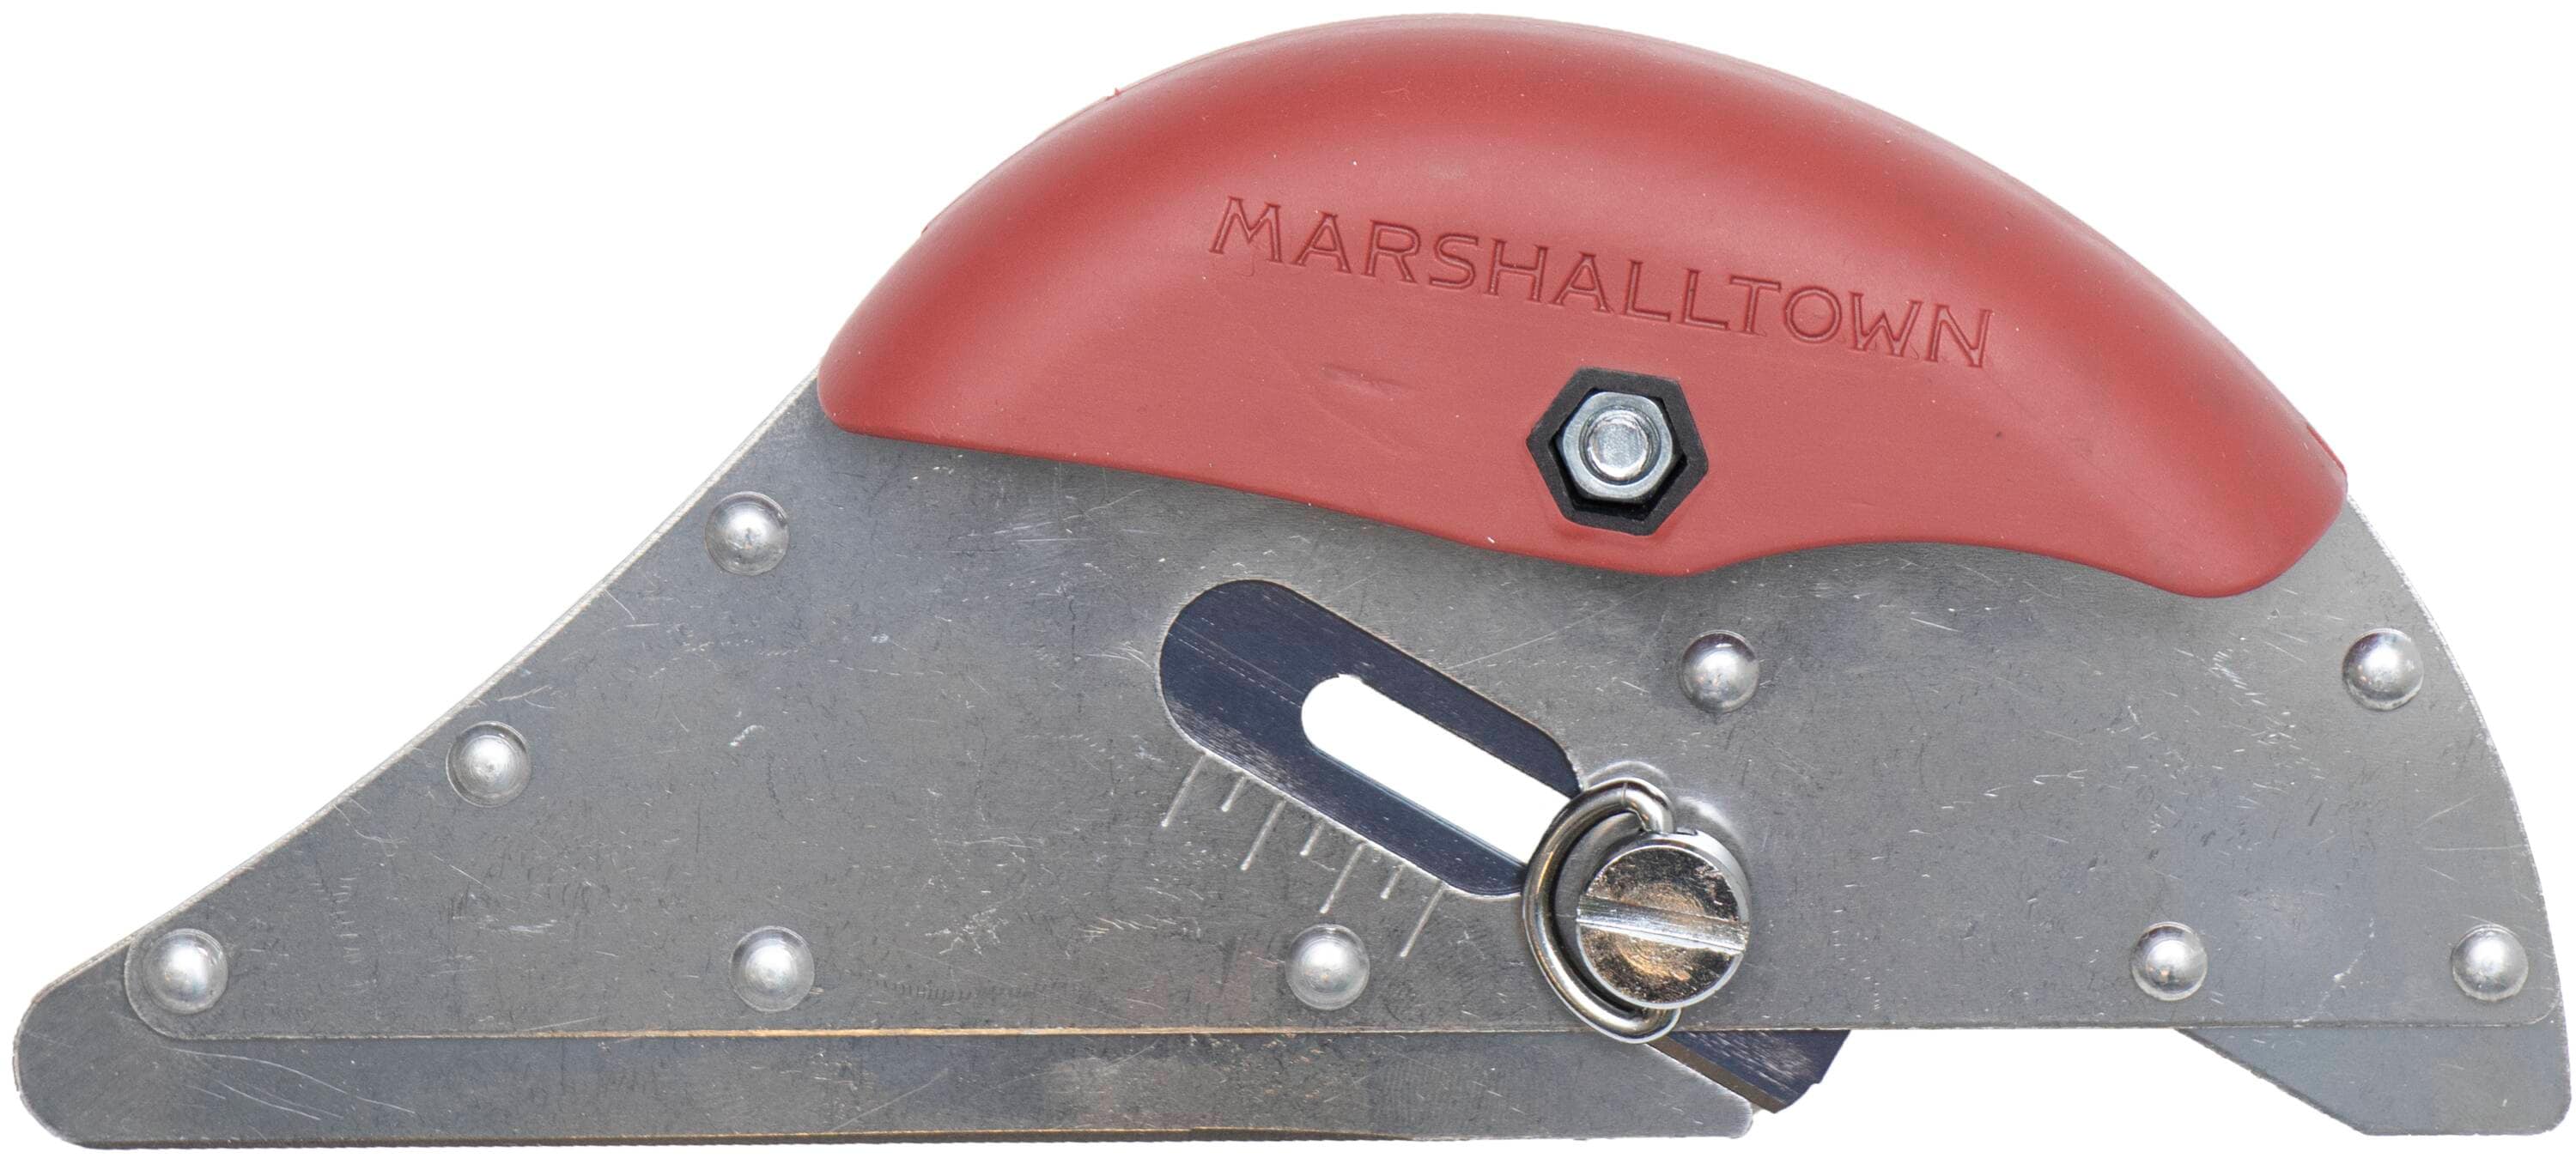 Marshalltown 18.5-in Adjustable Aluminum Carpet Knee Kicker in the